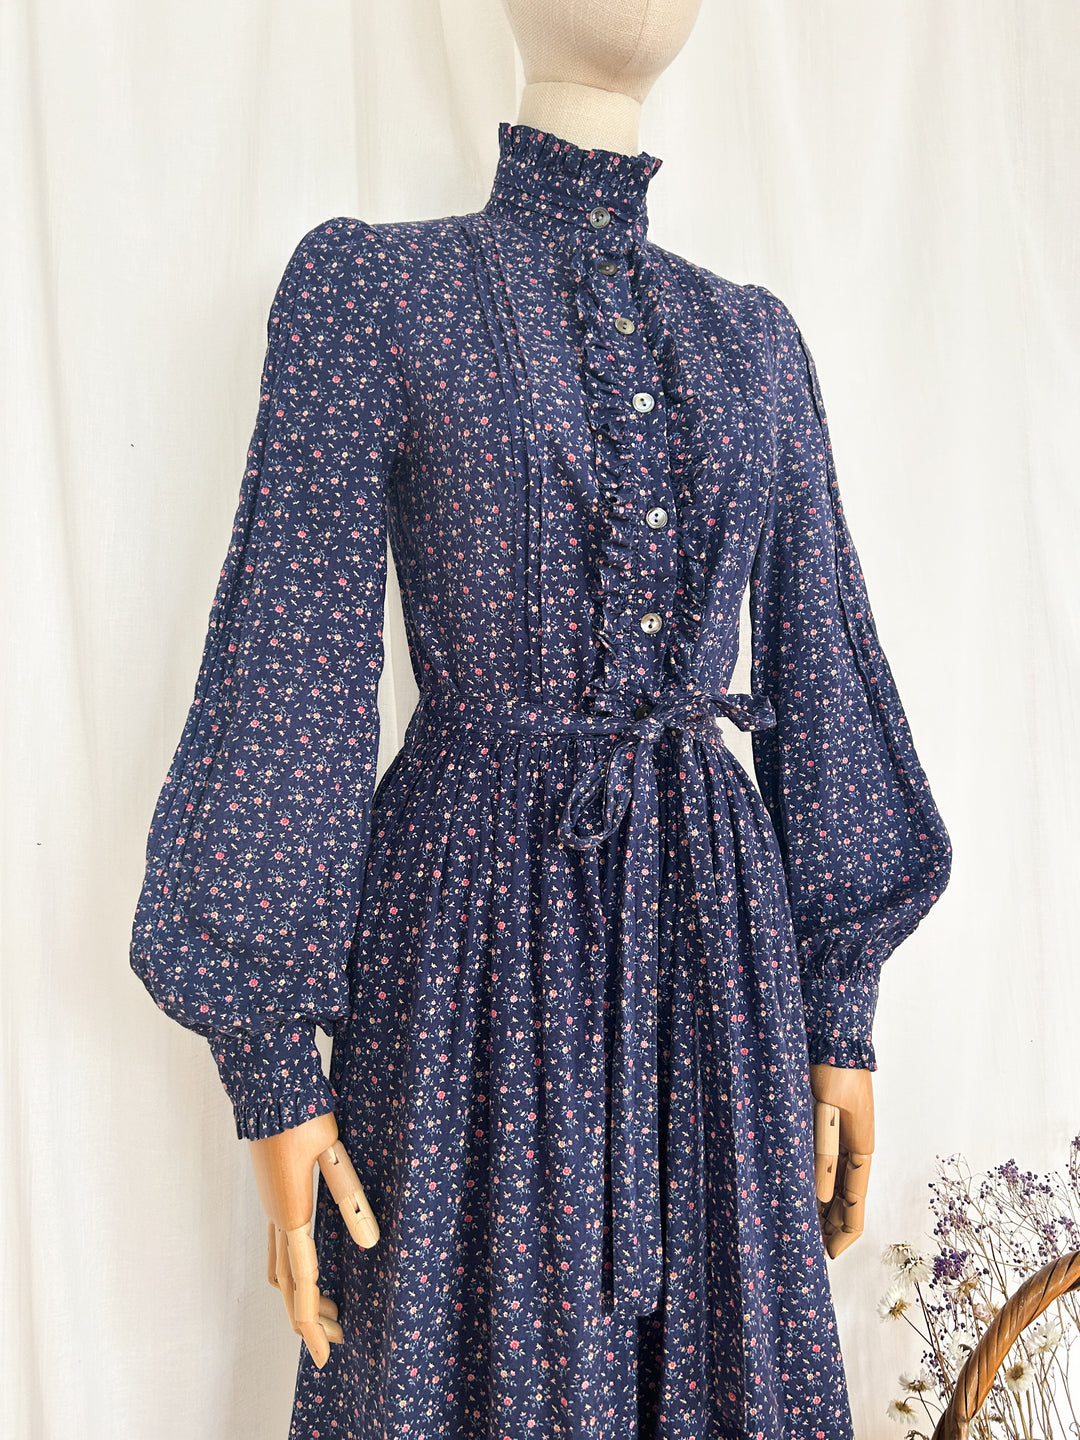 Stunning Rare Late 70s Laura Ashley Cotton Victoriana Midi Dress